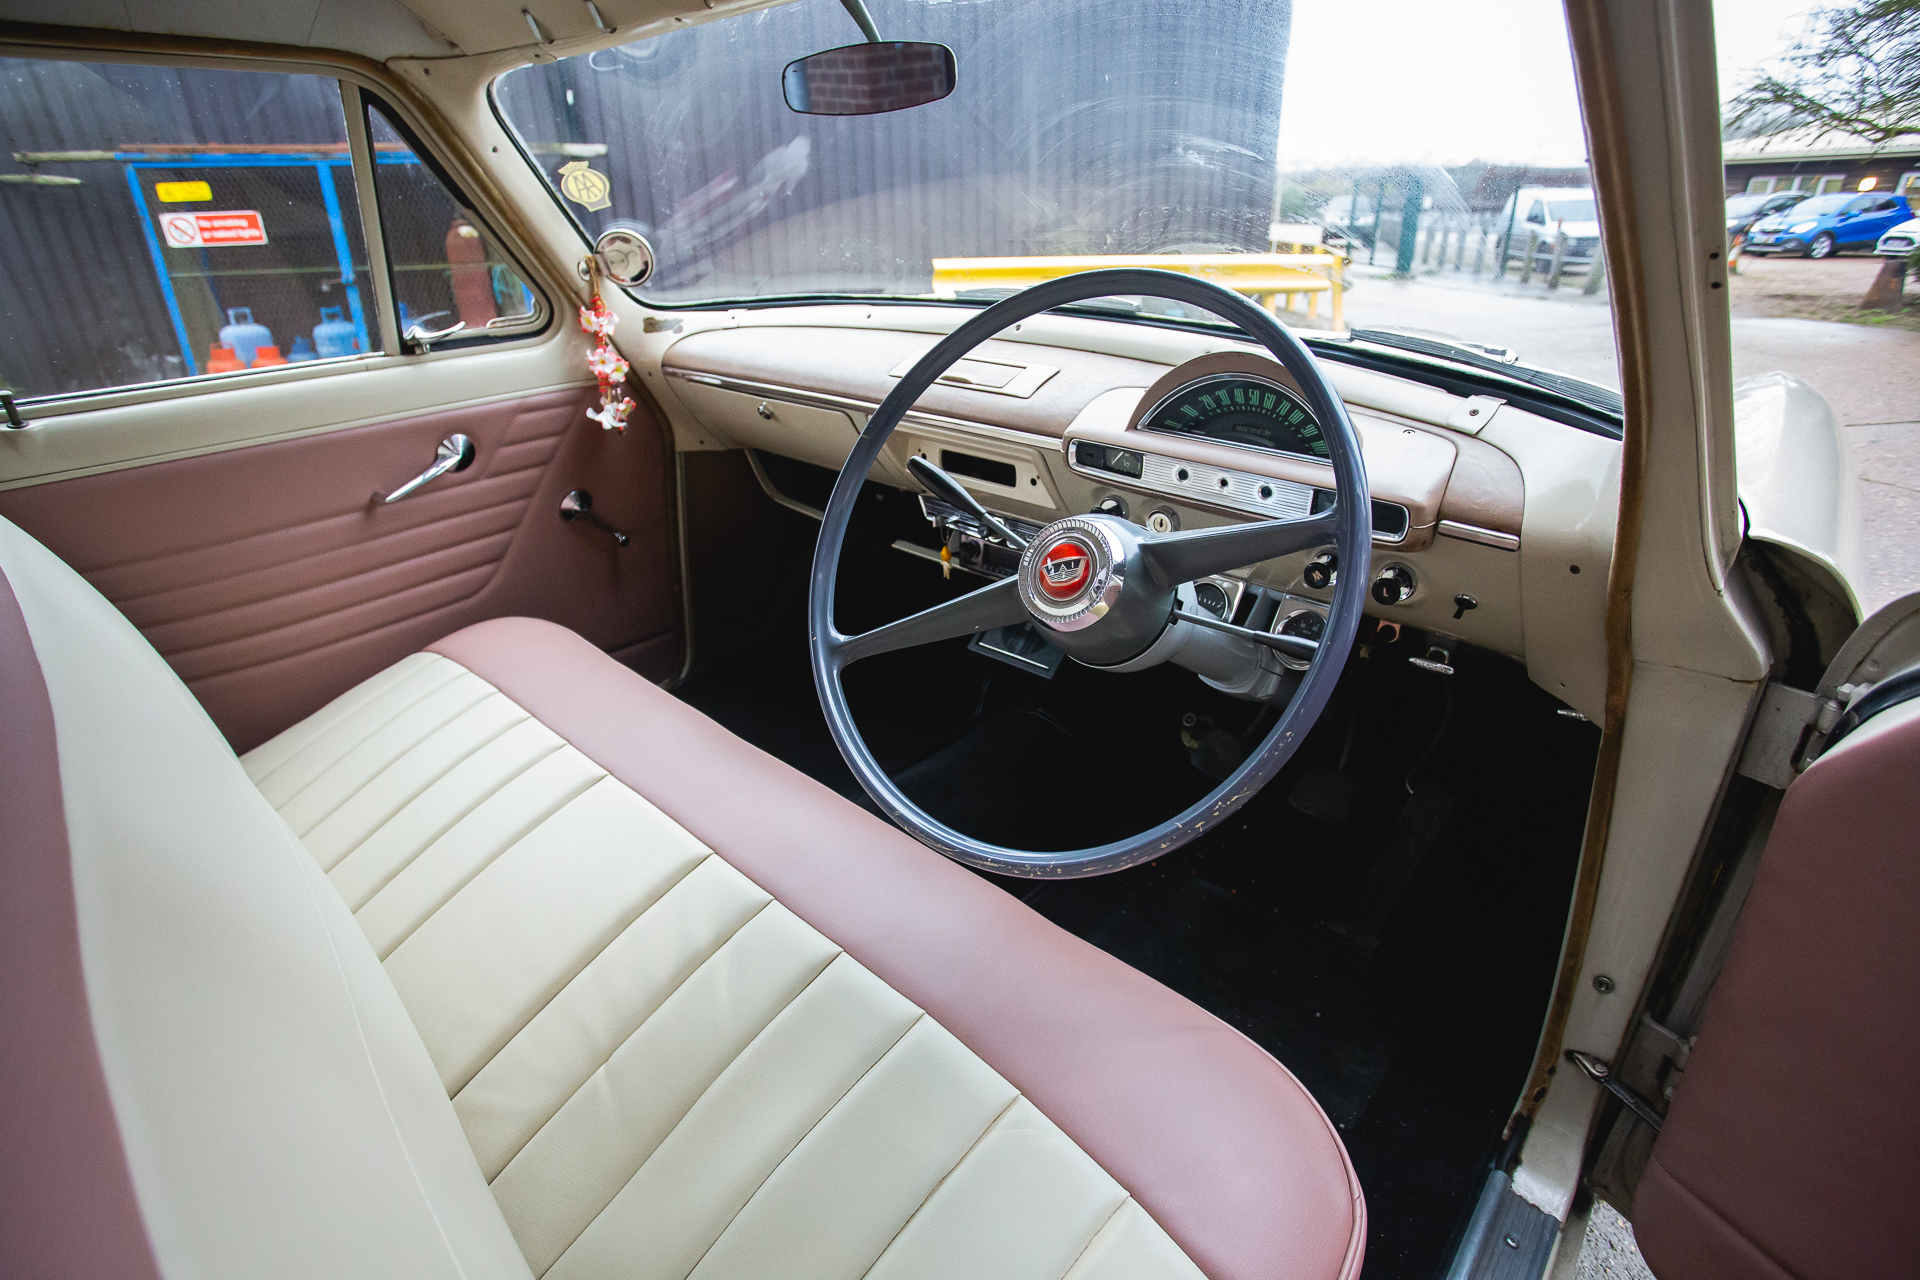 New Arrival - 1959 Ford Consul - Bridge Classic Cars : Bridge Classic Cars